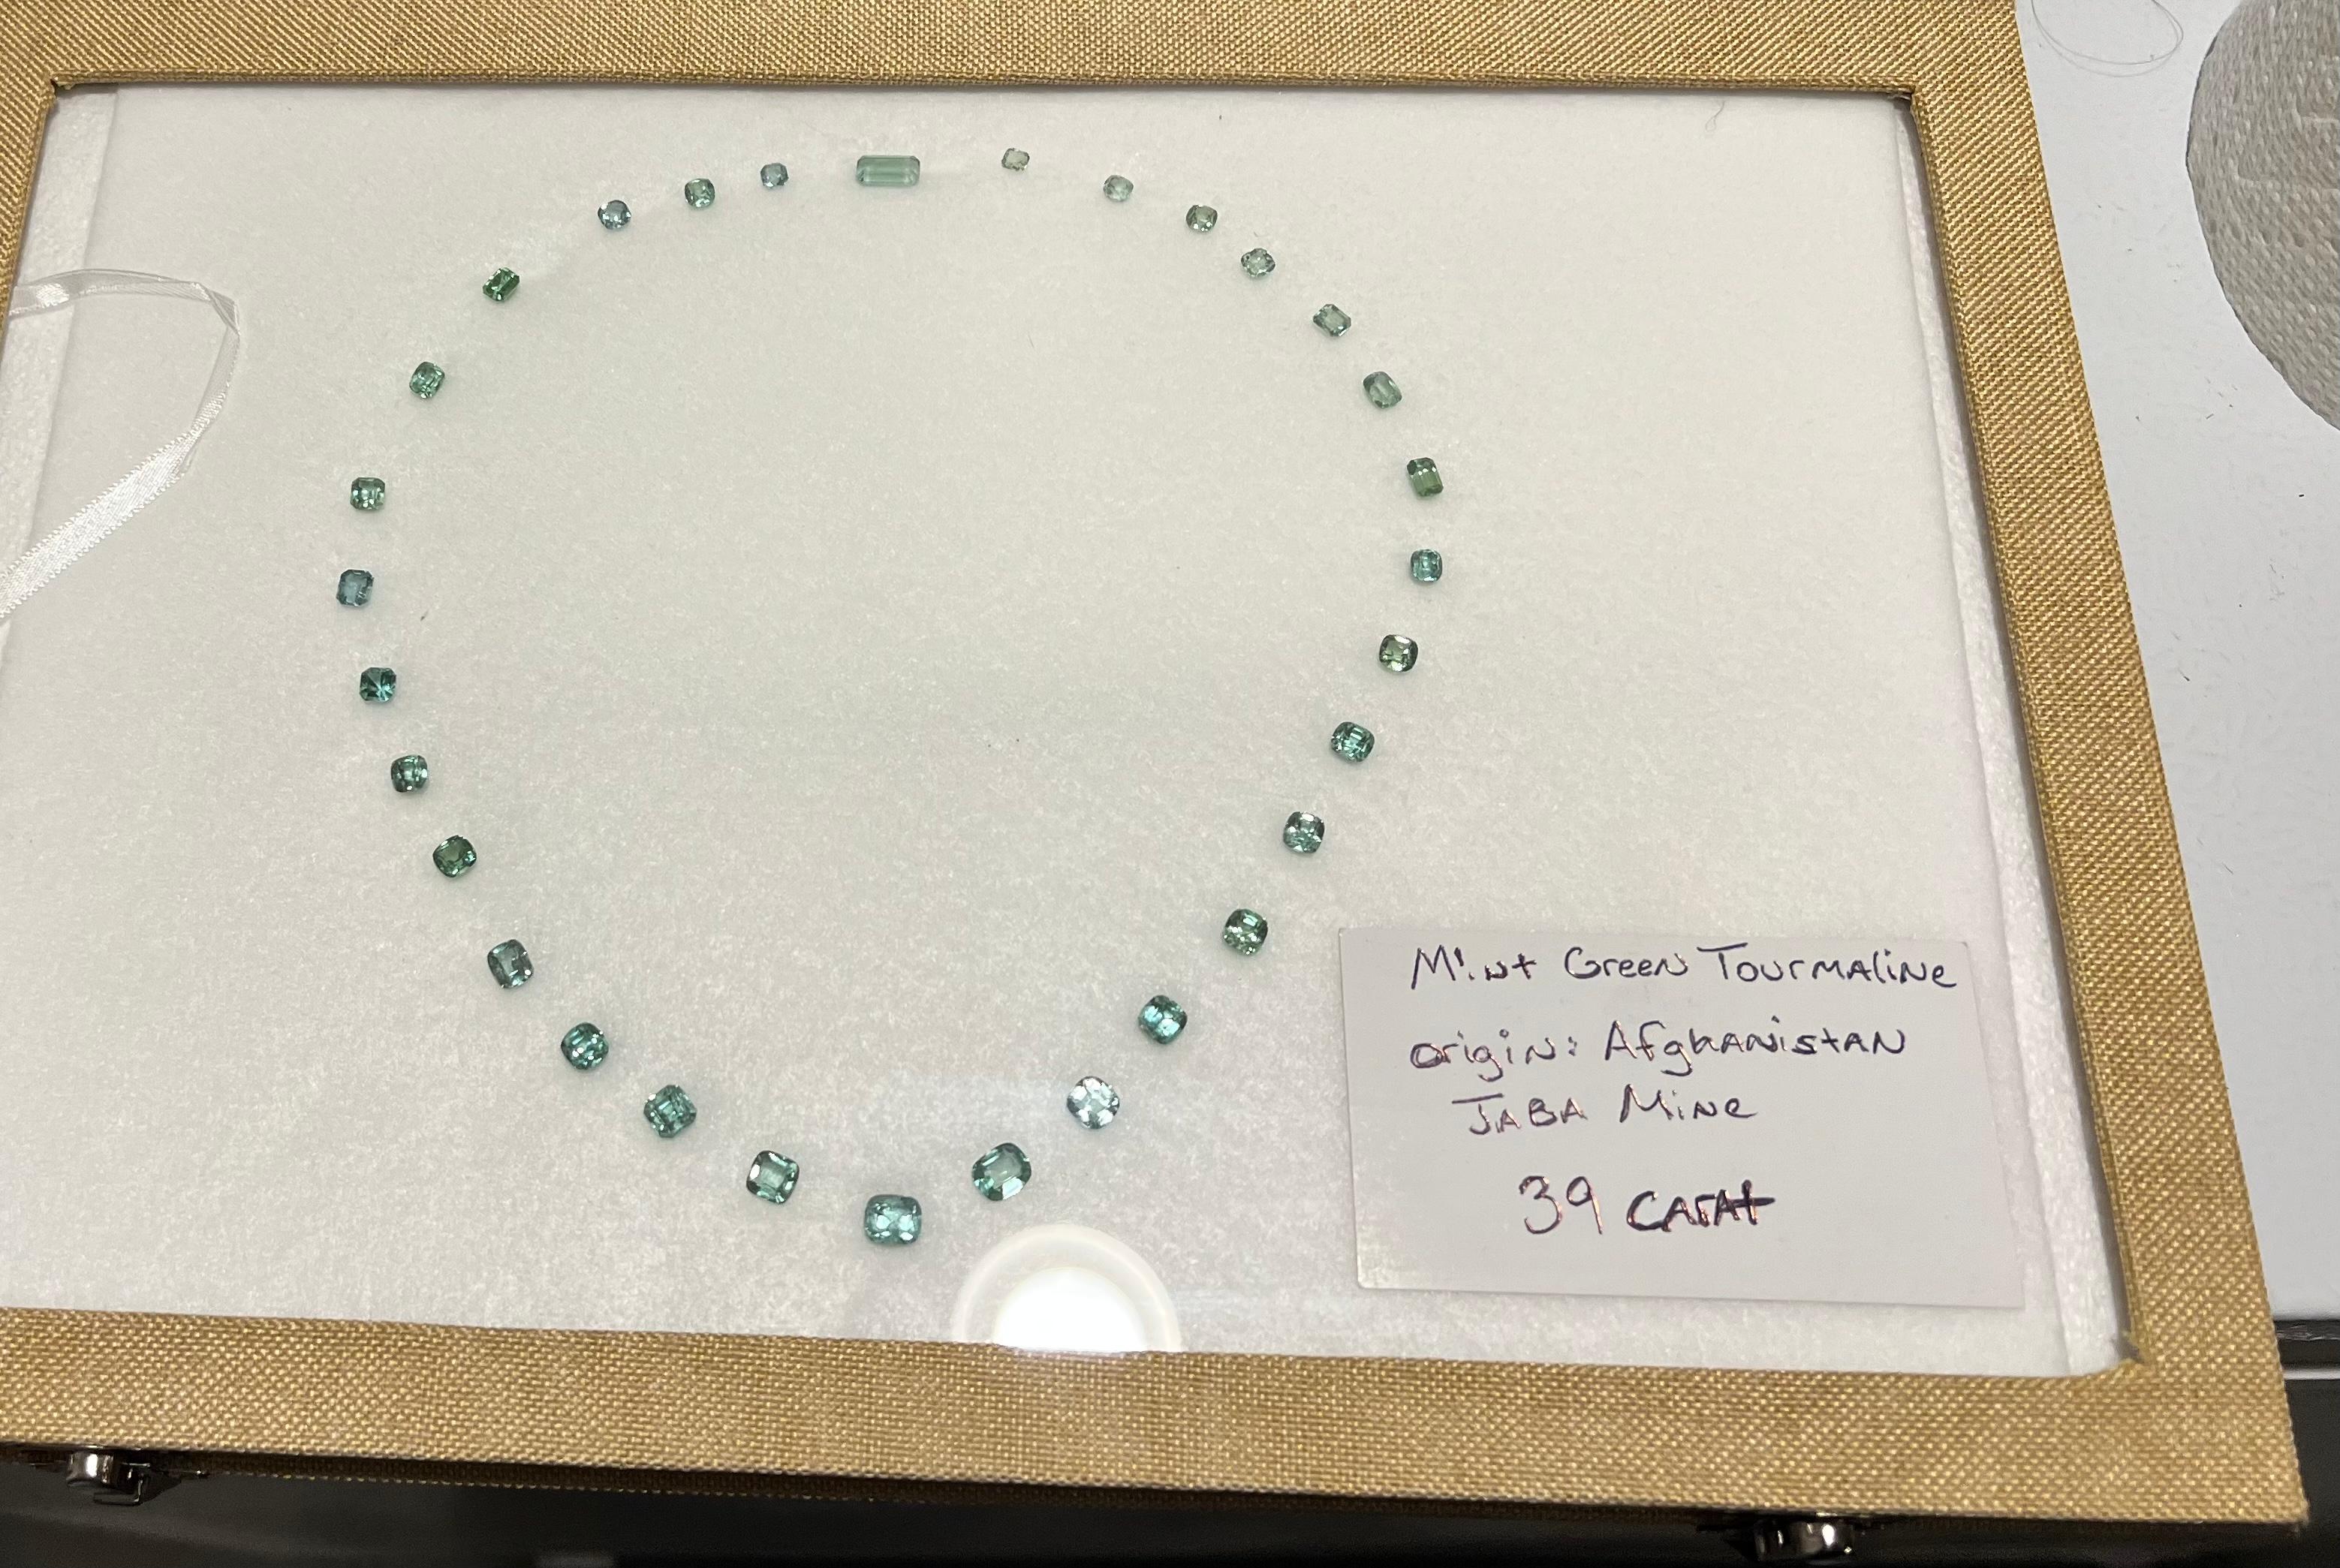 Women's or Men's 39 Carat Mint Green Tourmaline Gemstones for Necklace